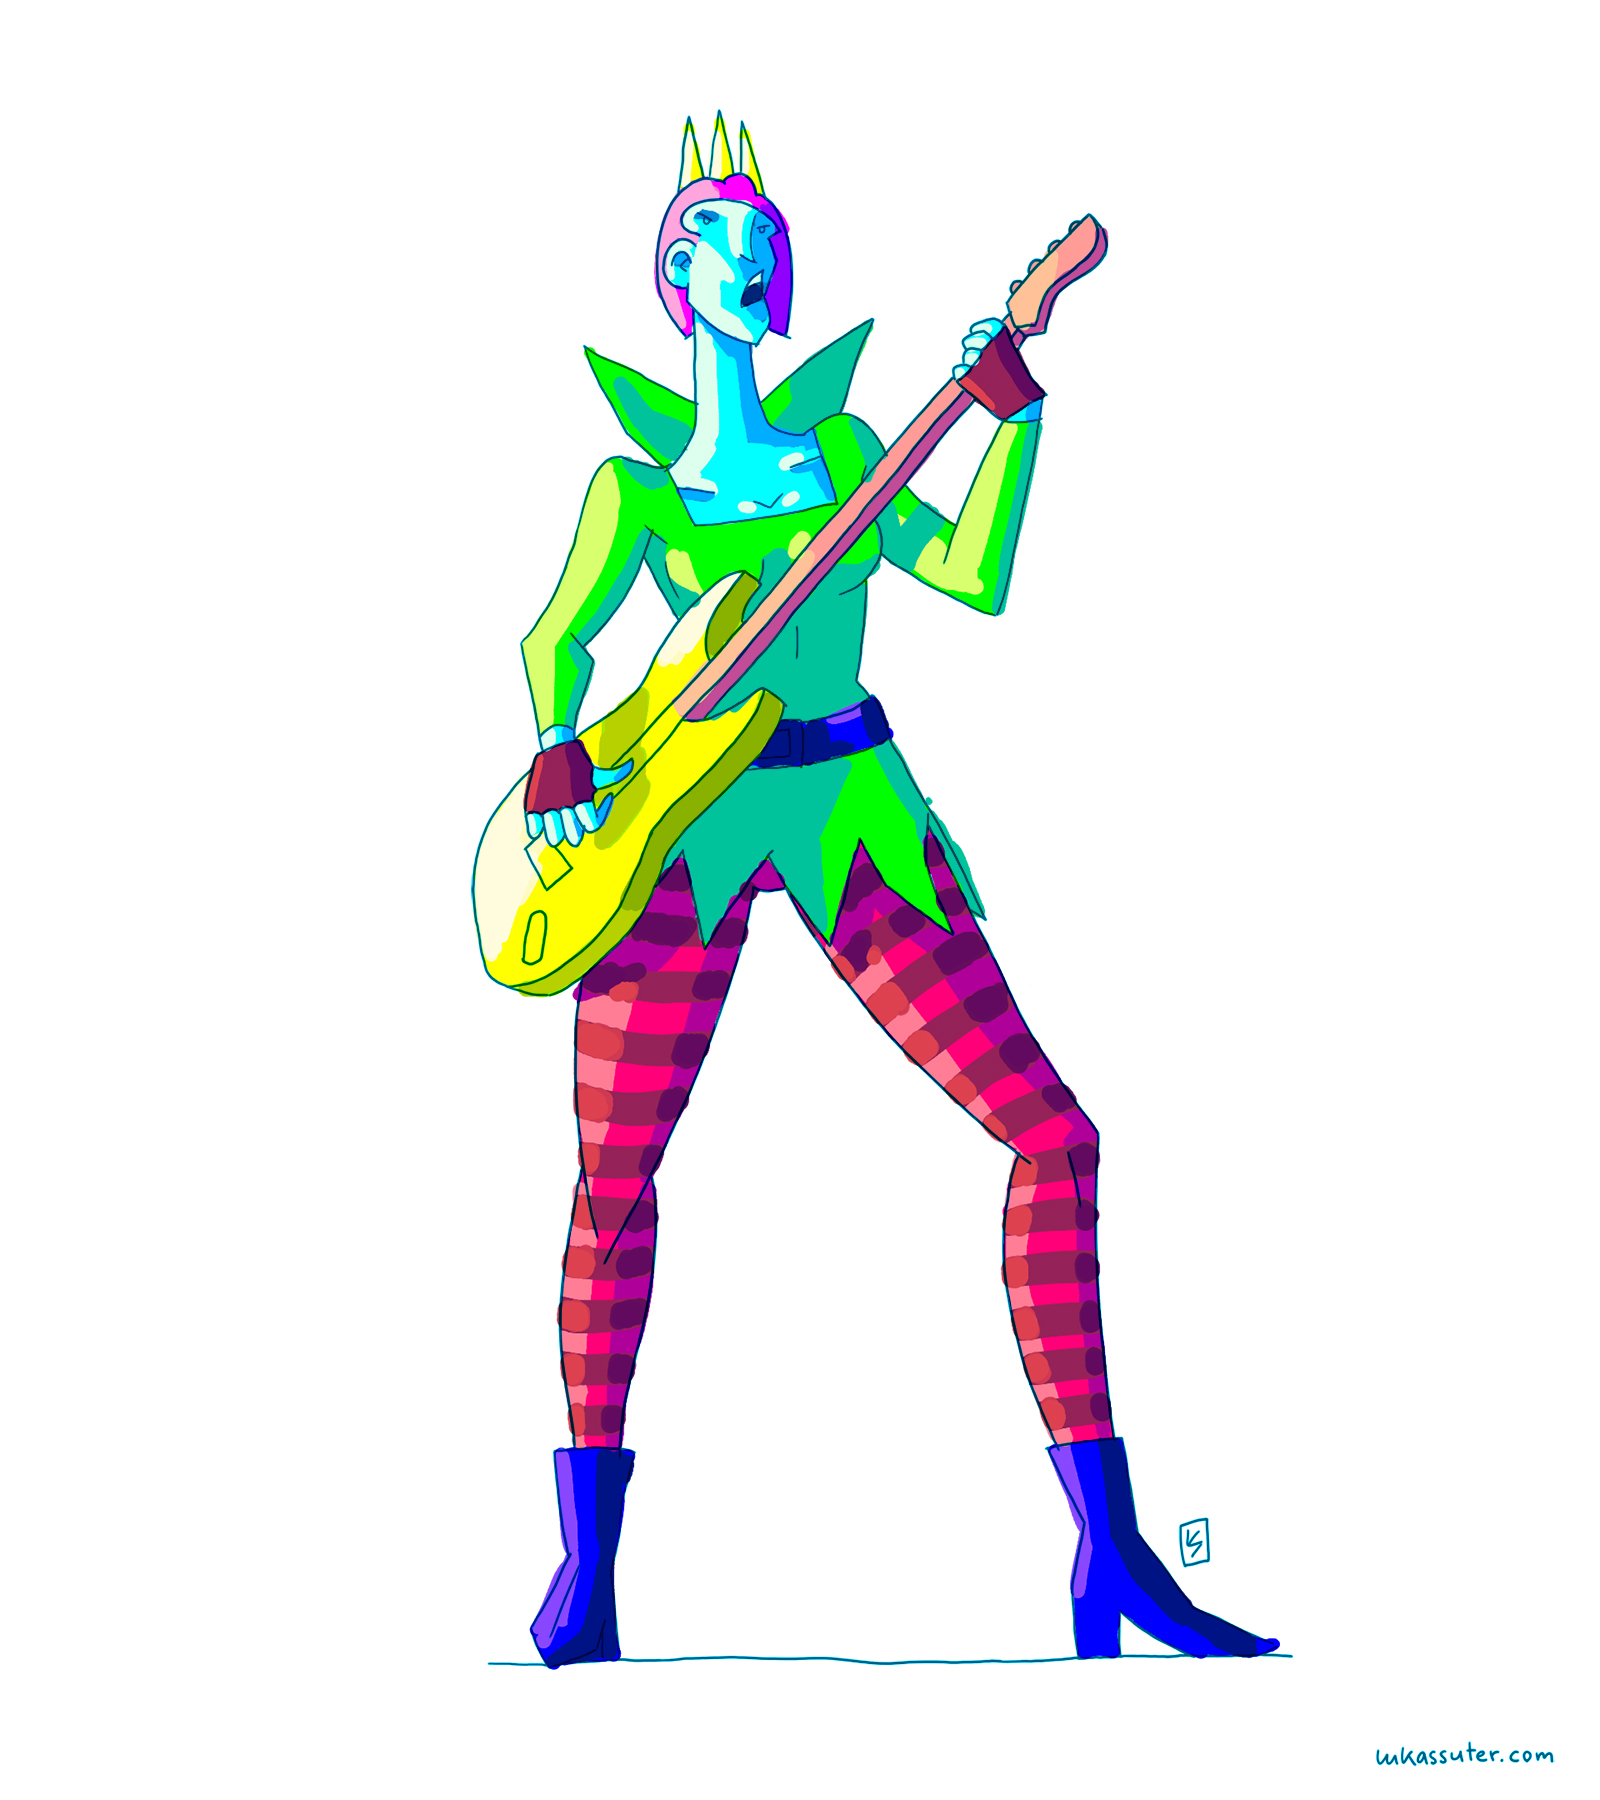 Punk girl plays the guitar